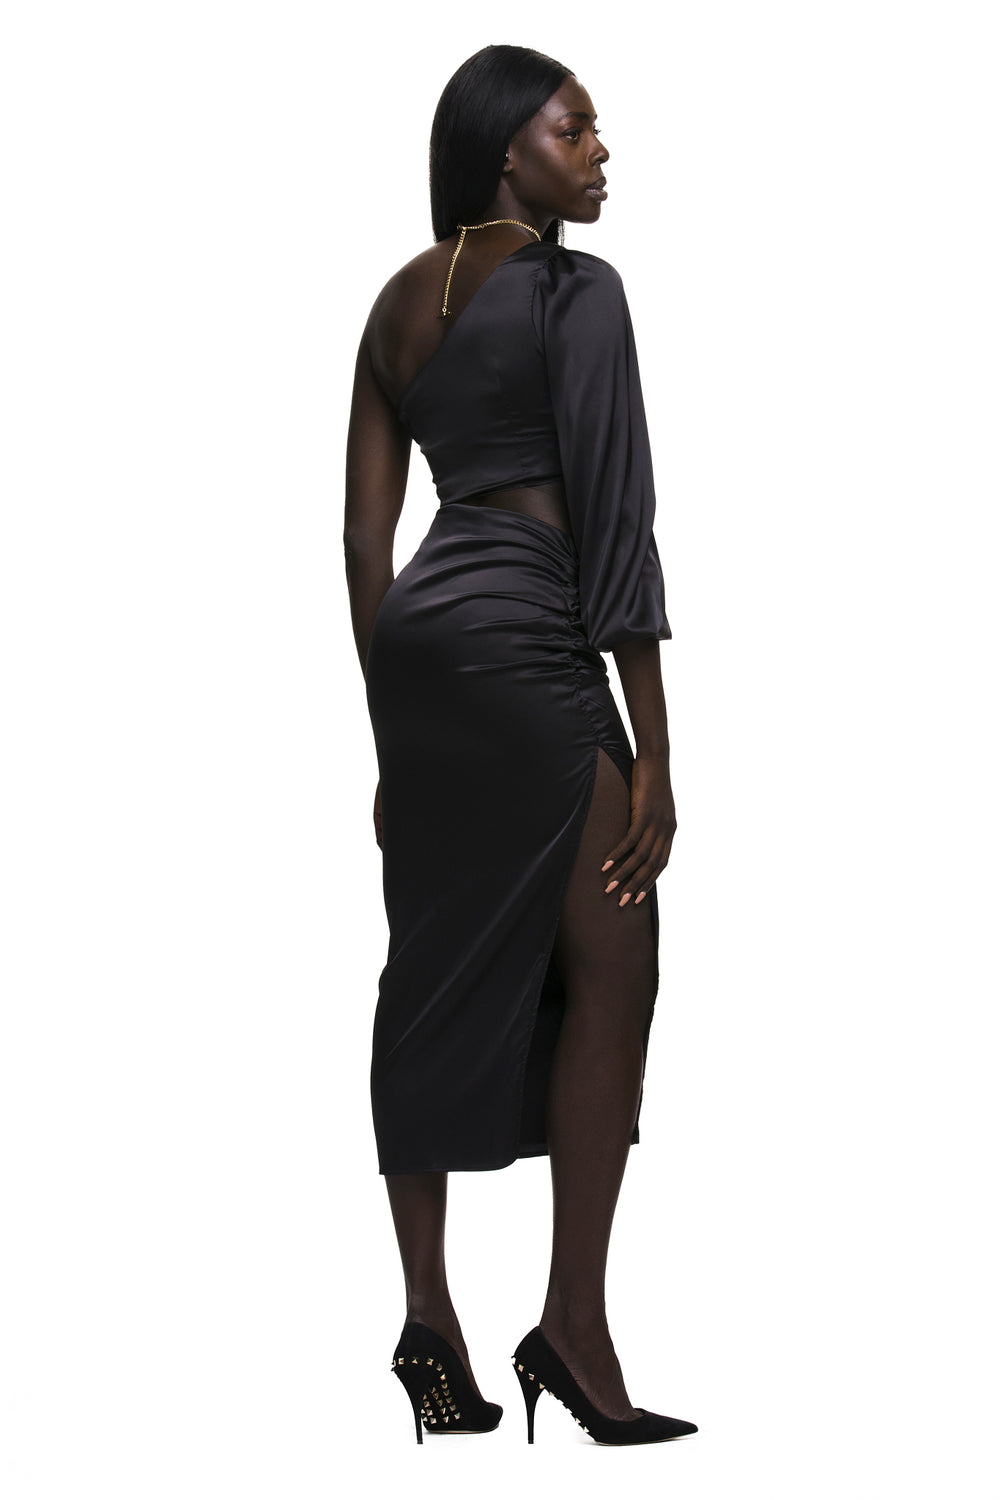 Christabel Black Asymmetrical Midi Dress - Expressive Collective CO.